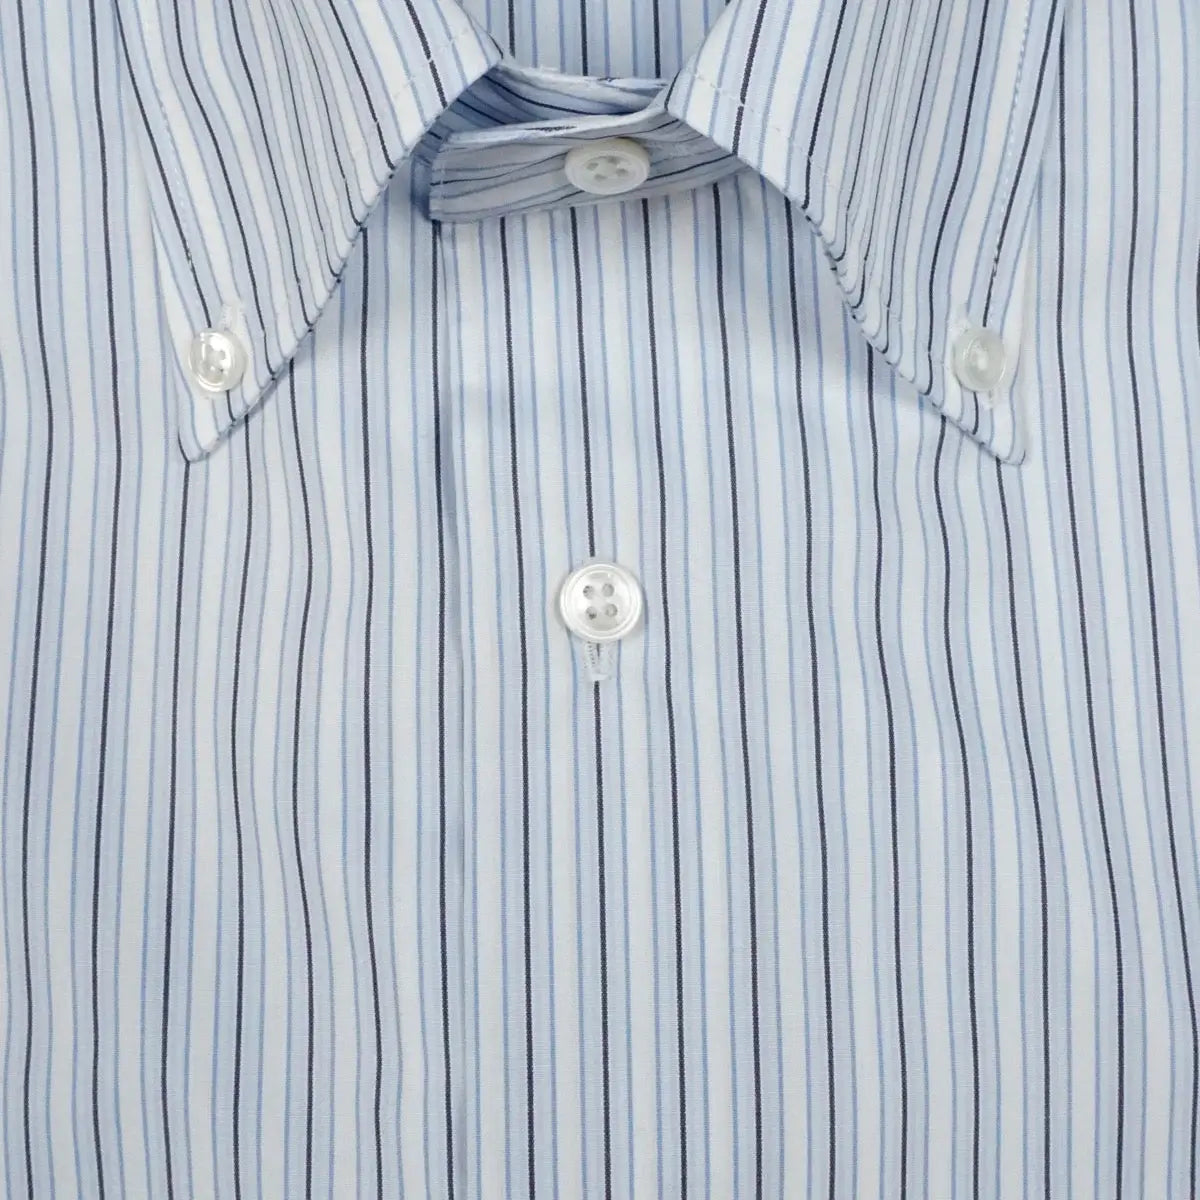 Blue & White Stripe Swiss Supraluxe Premio Long Sleeve Shirt  Robert Old   